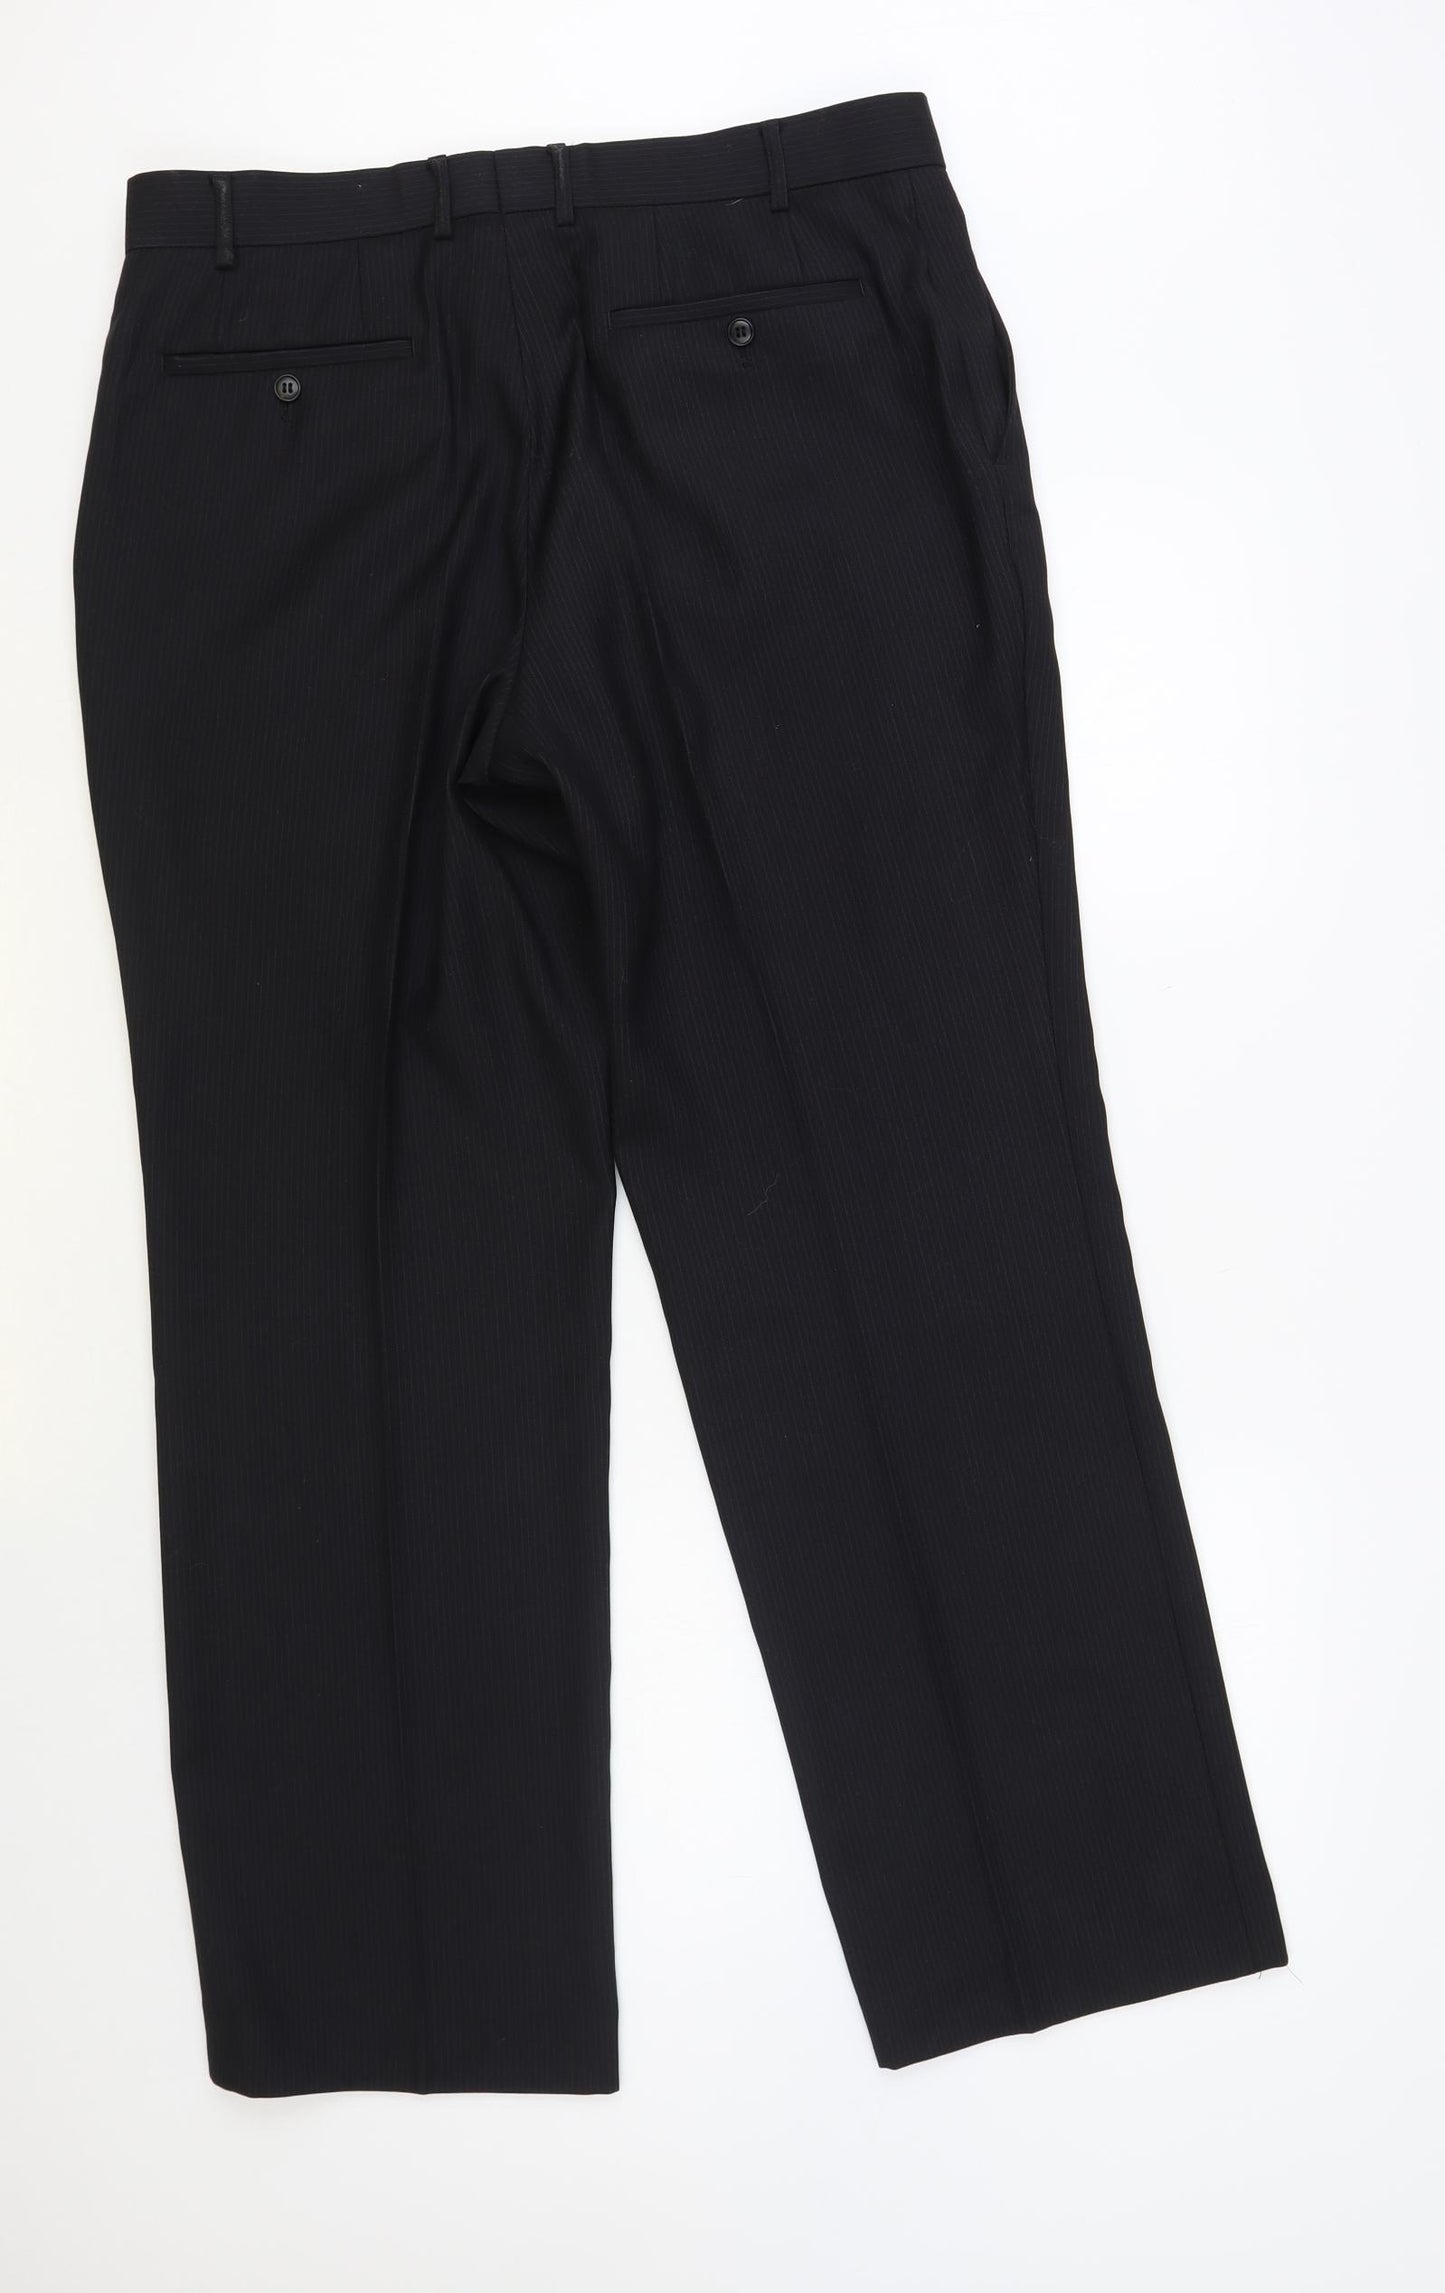 Daniel Grahame Mens Black Striped Polyester Dress Pants Trousers Size 34 in L31 in Regular Hook & Loop